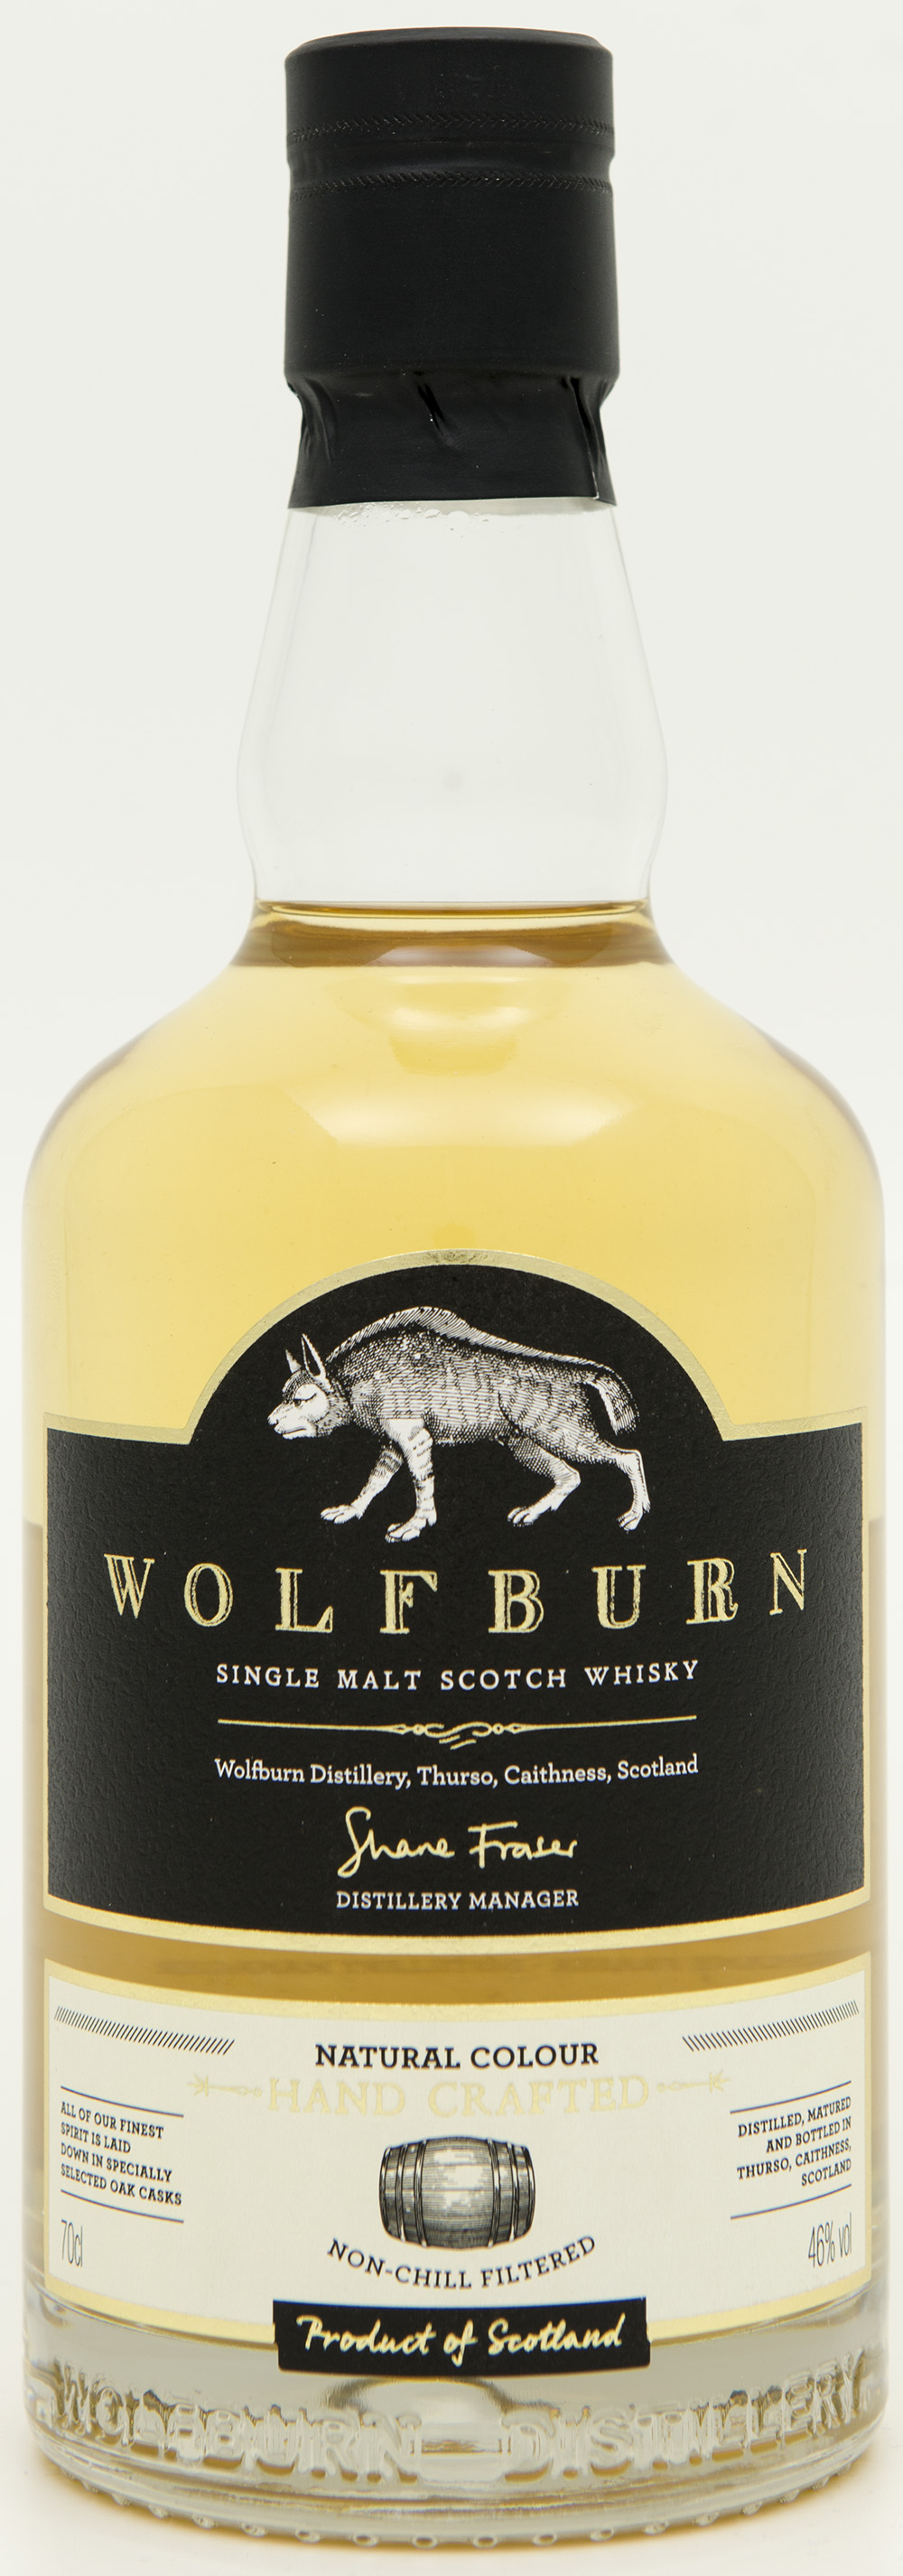 Billede: DSC_0794 - Wolfburn First Edition - bottle front.jpg